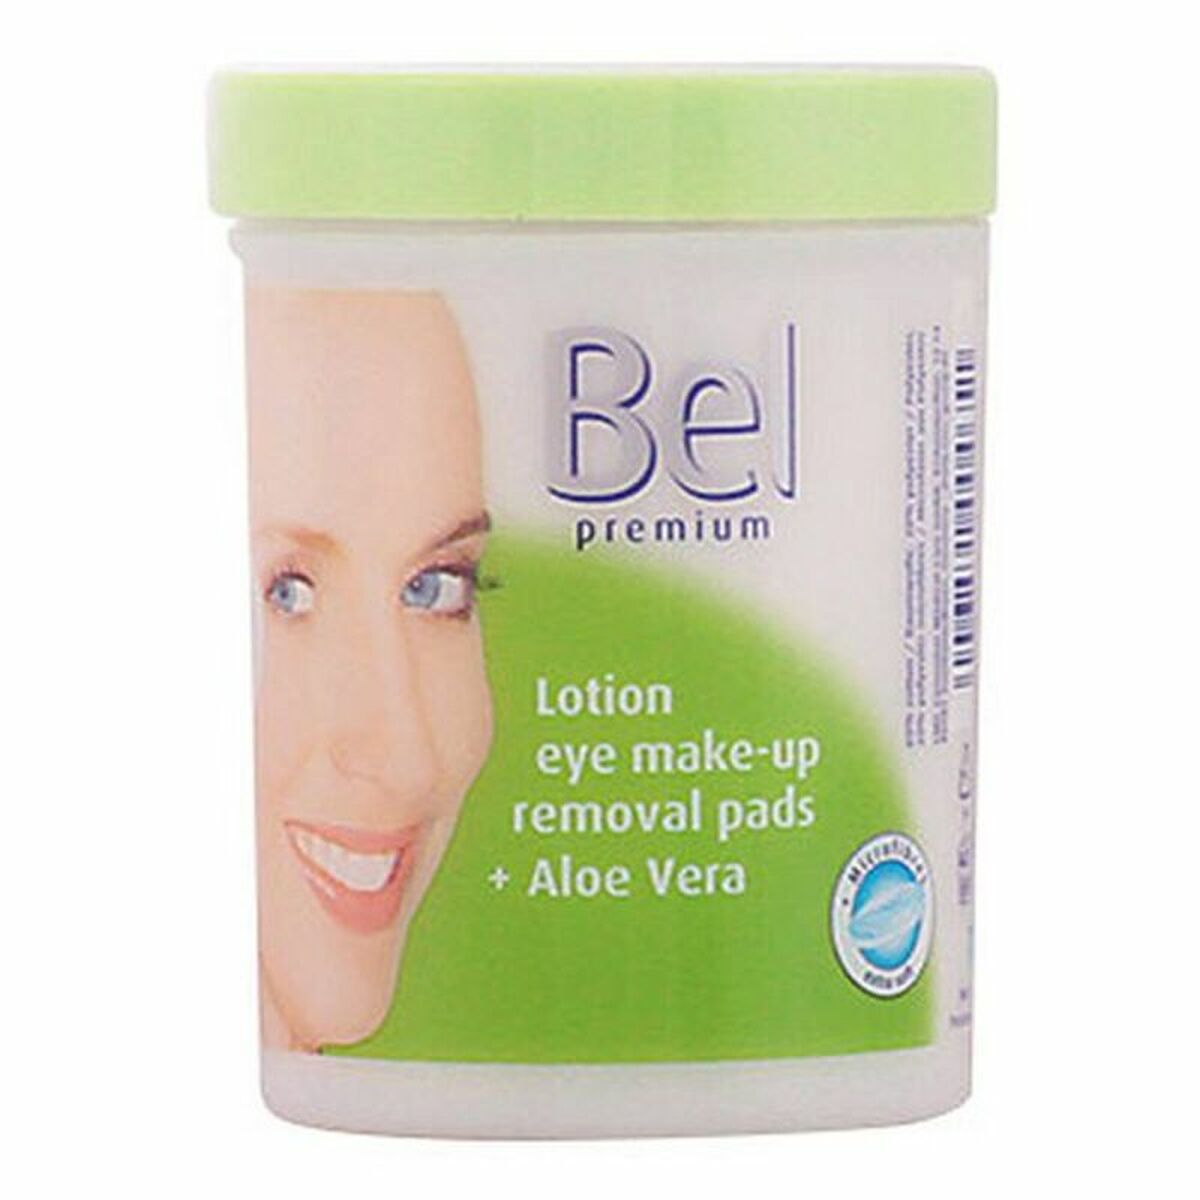 Make-up Remover Pads Bel Bel Premium 70 Units